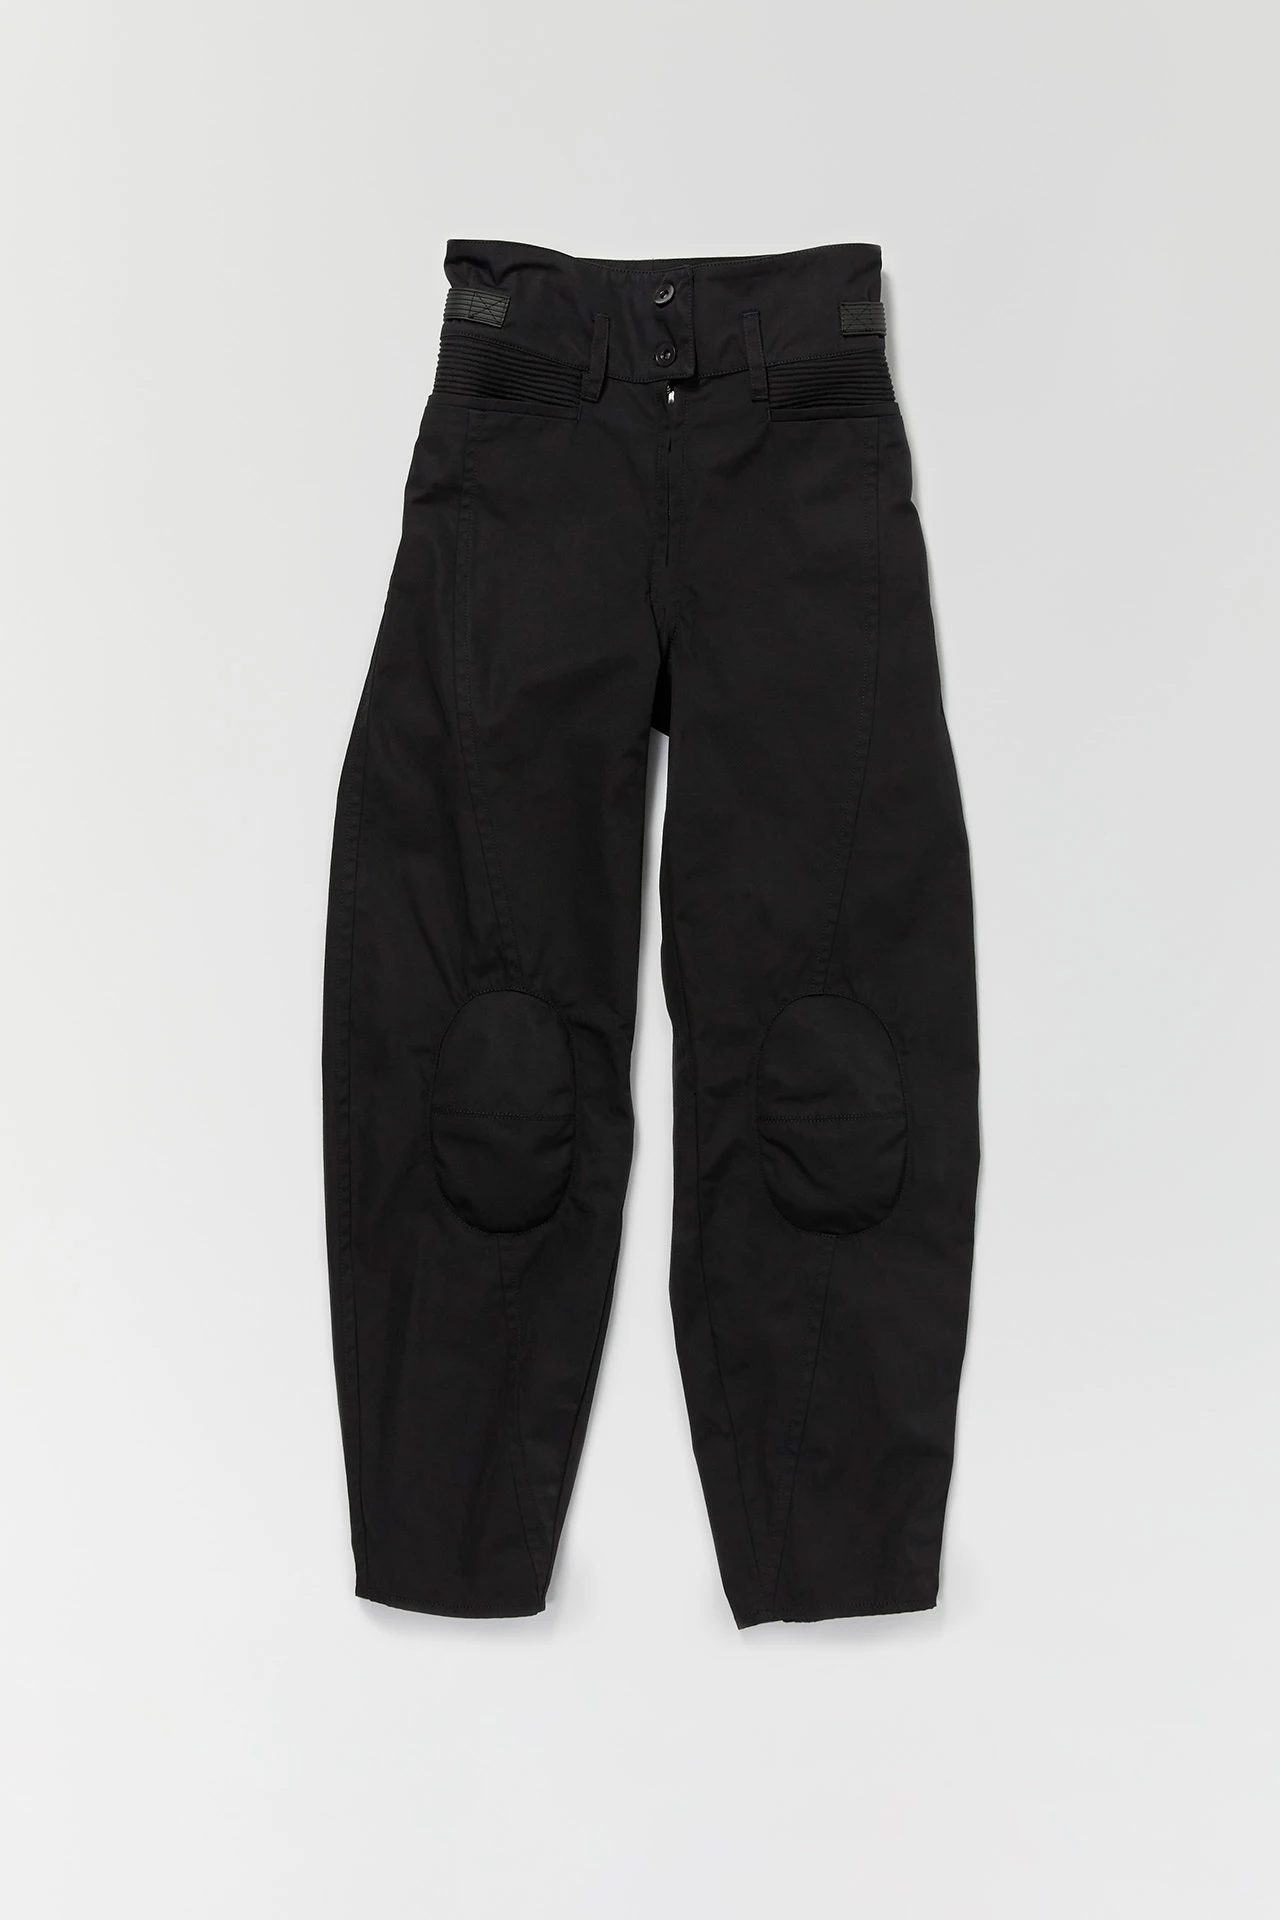 Shuji-black-trouser-01